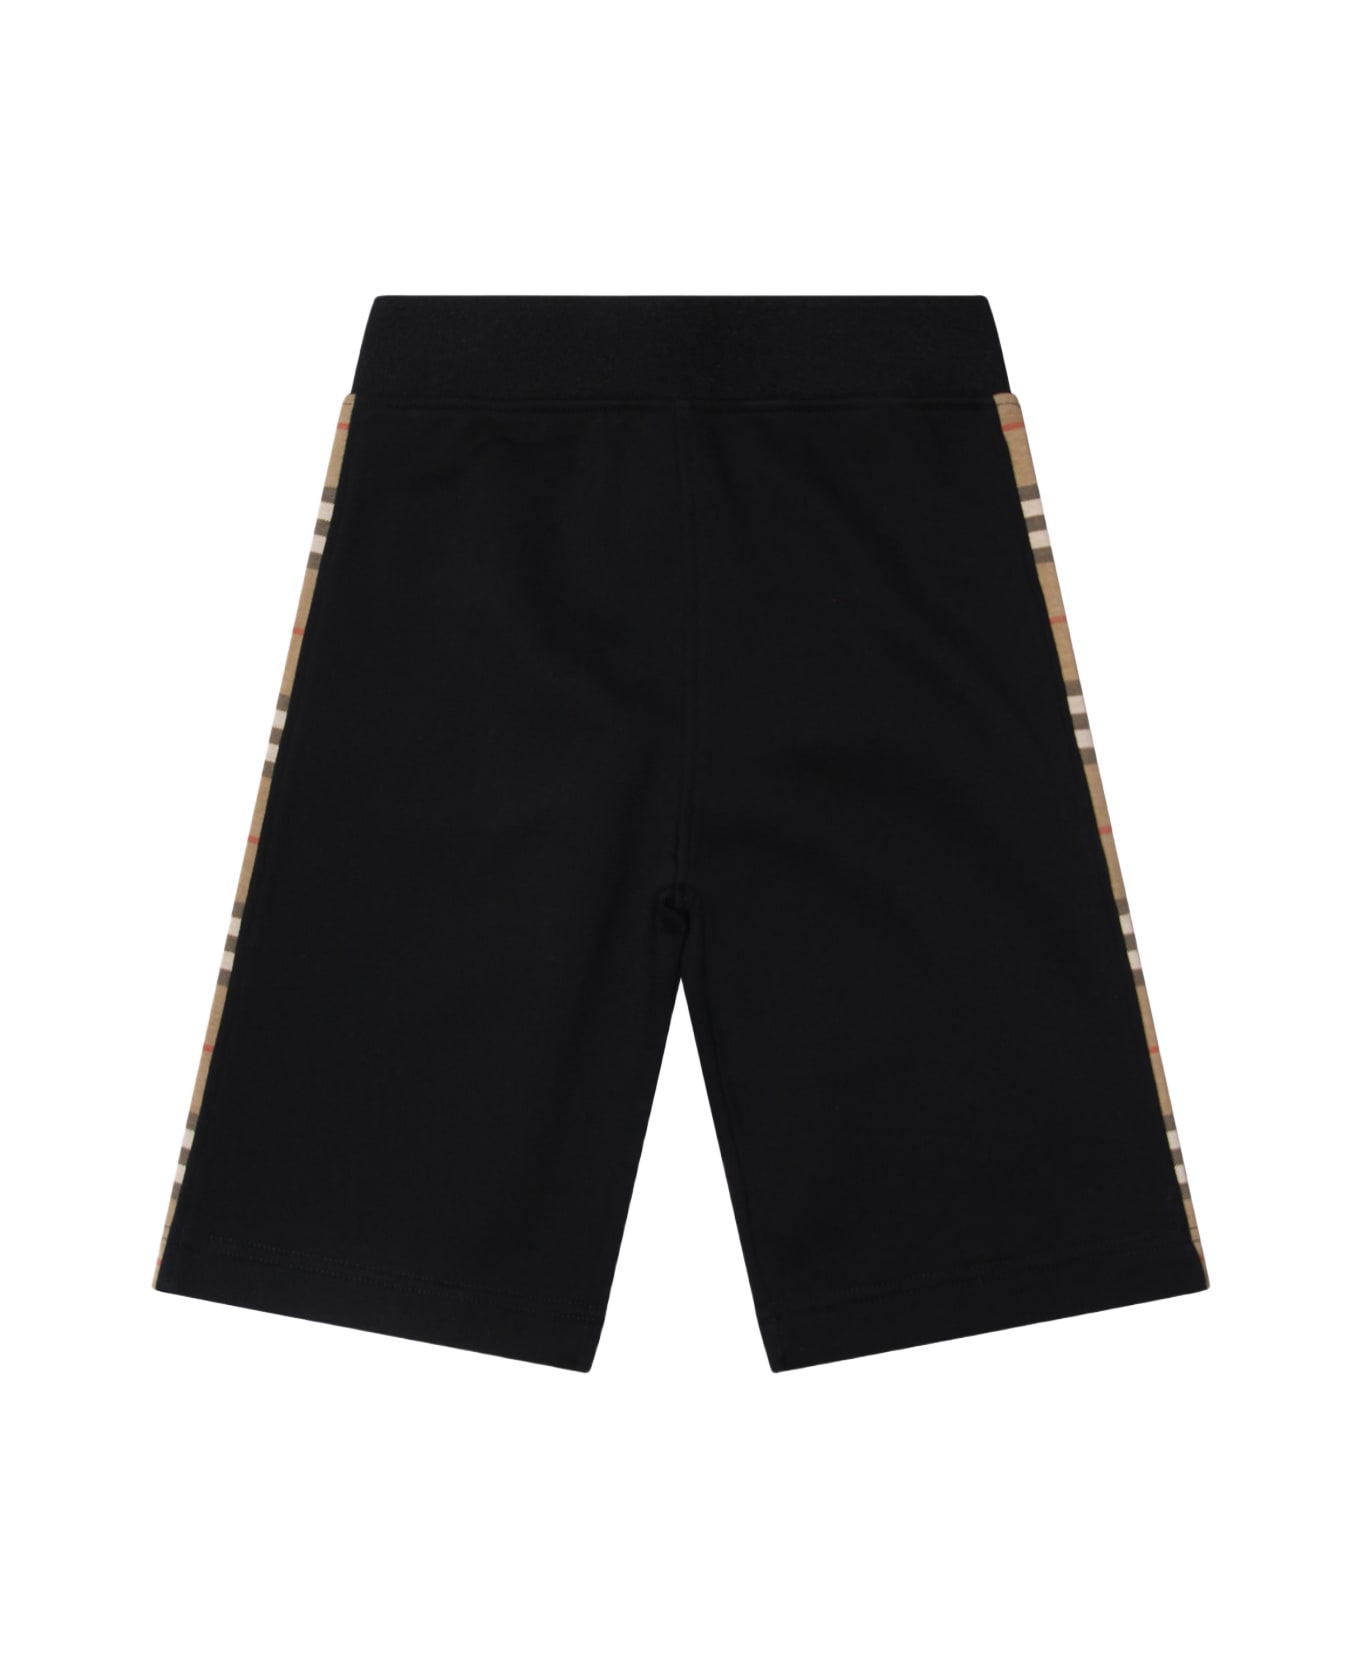 Burberry Black Cotton Shorts - Black ボトムス